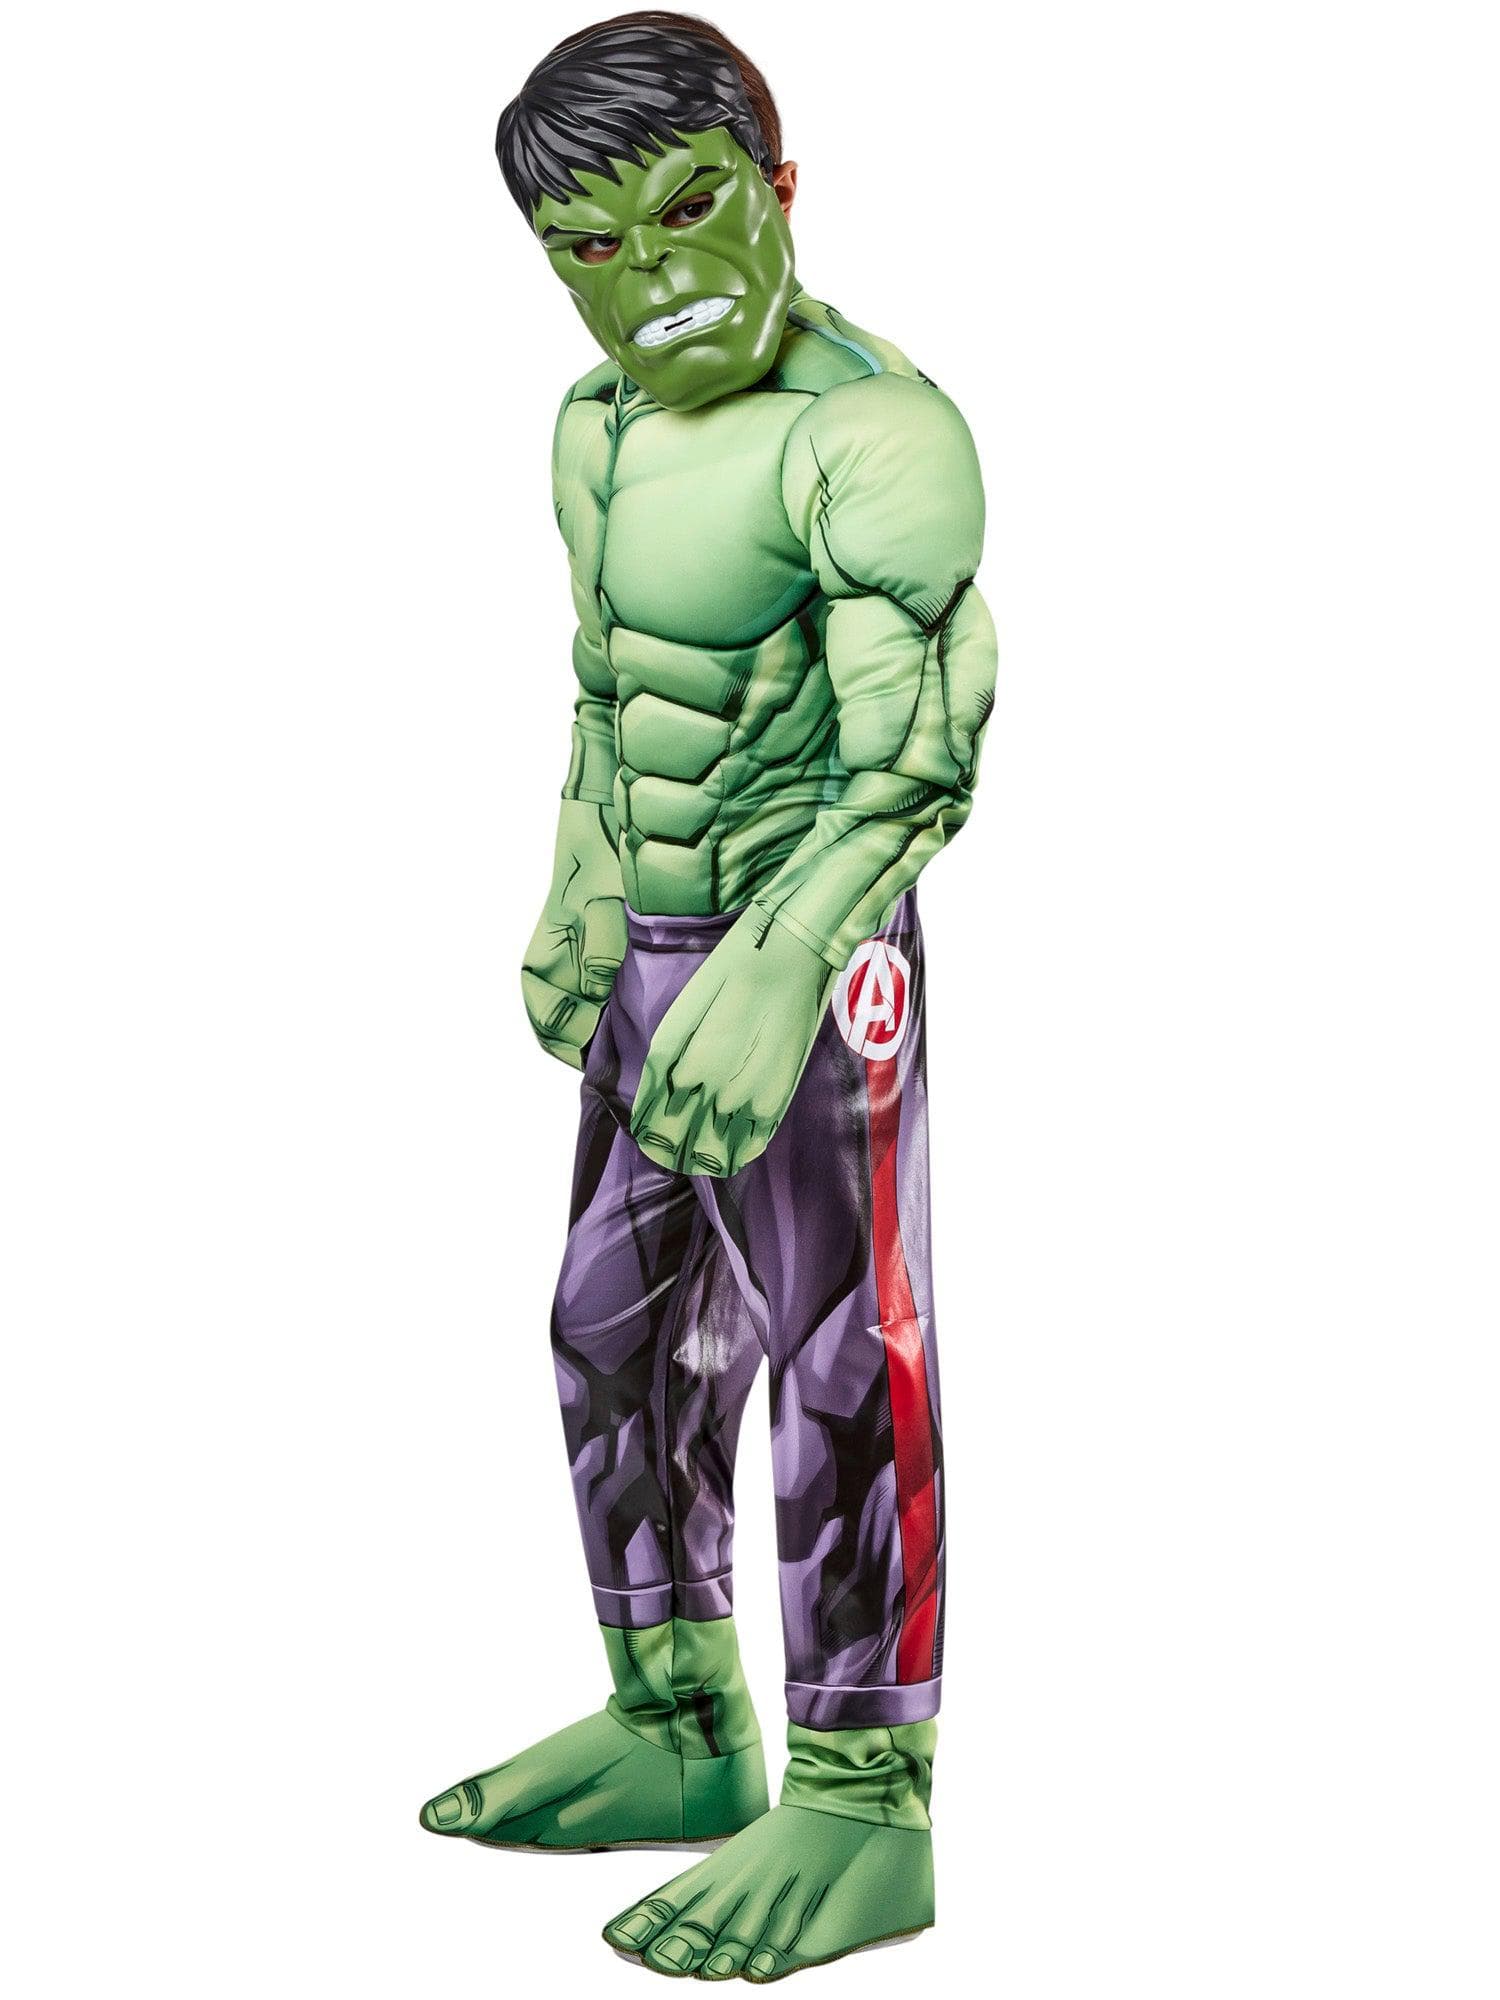 Hulk Child Costume - costumes.com